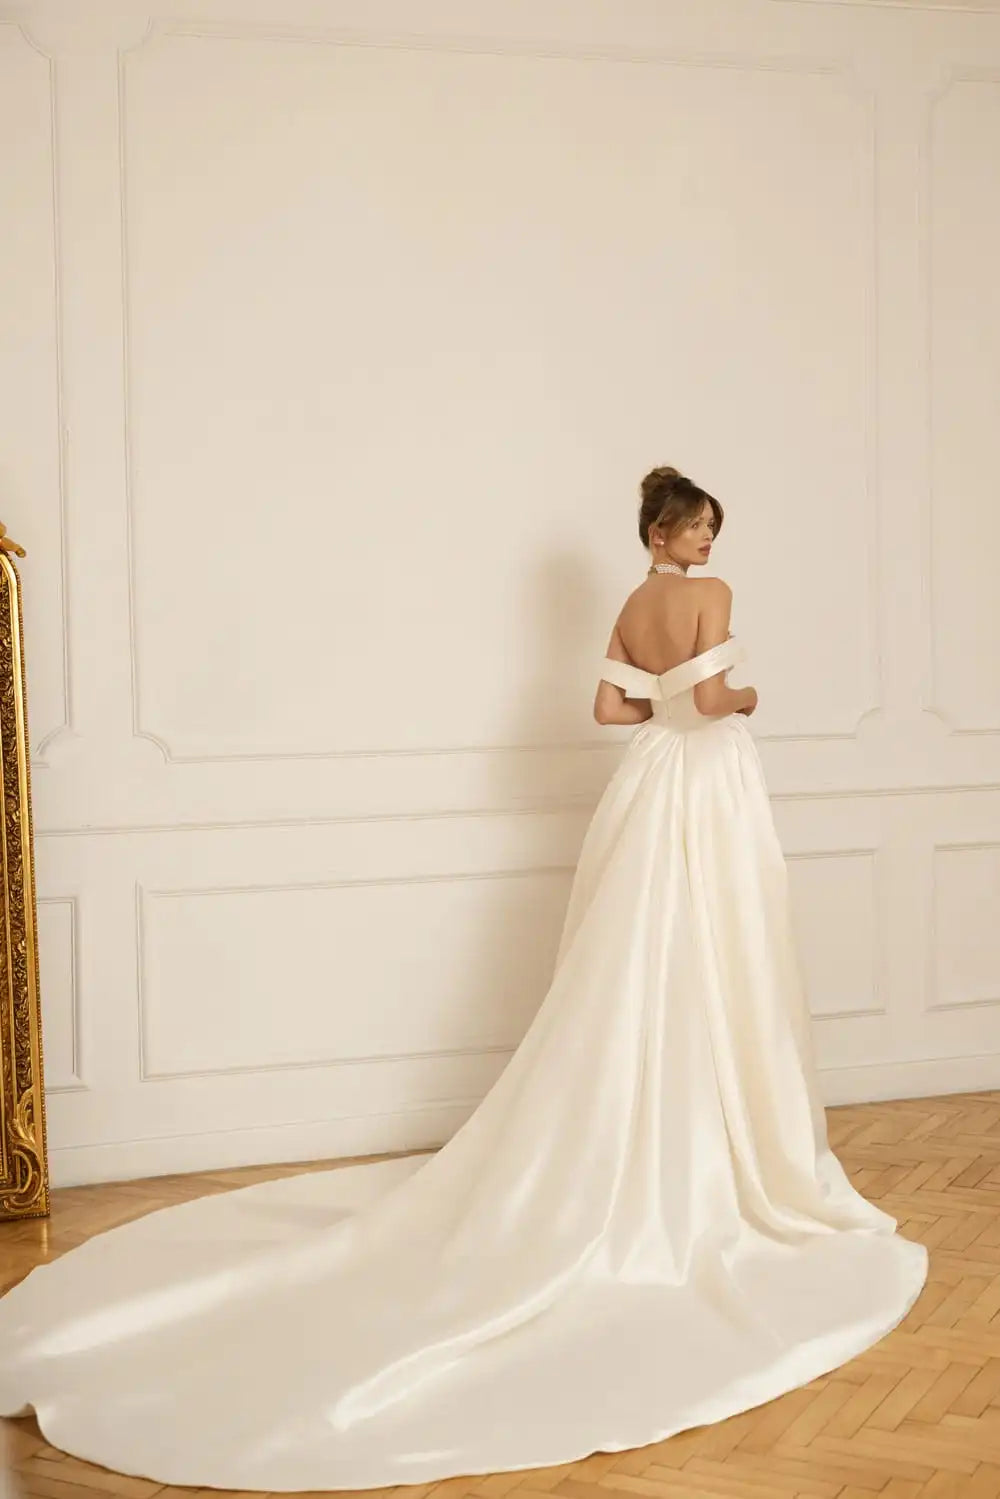 Detachable overskirt - off the rack wedding dress